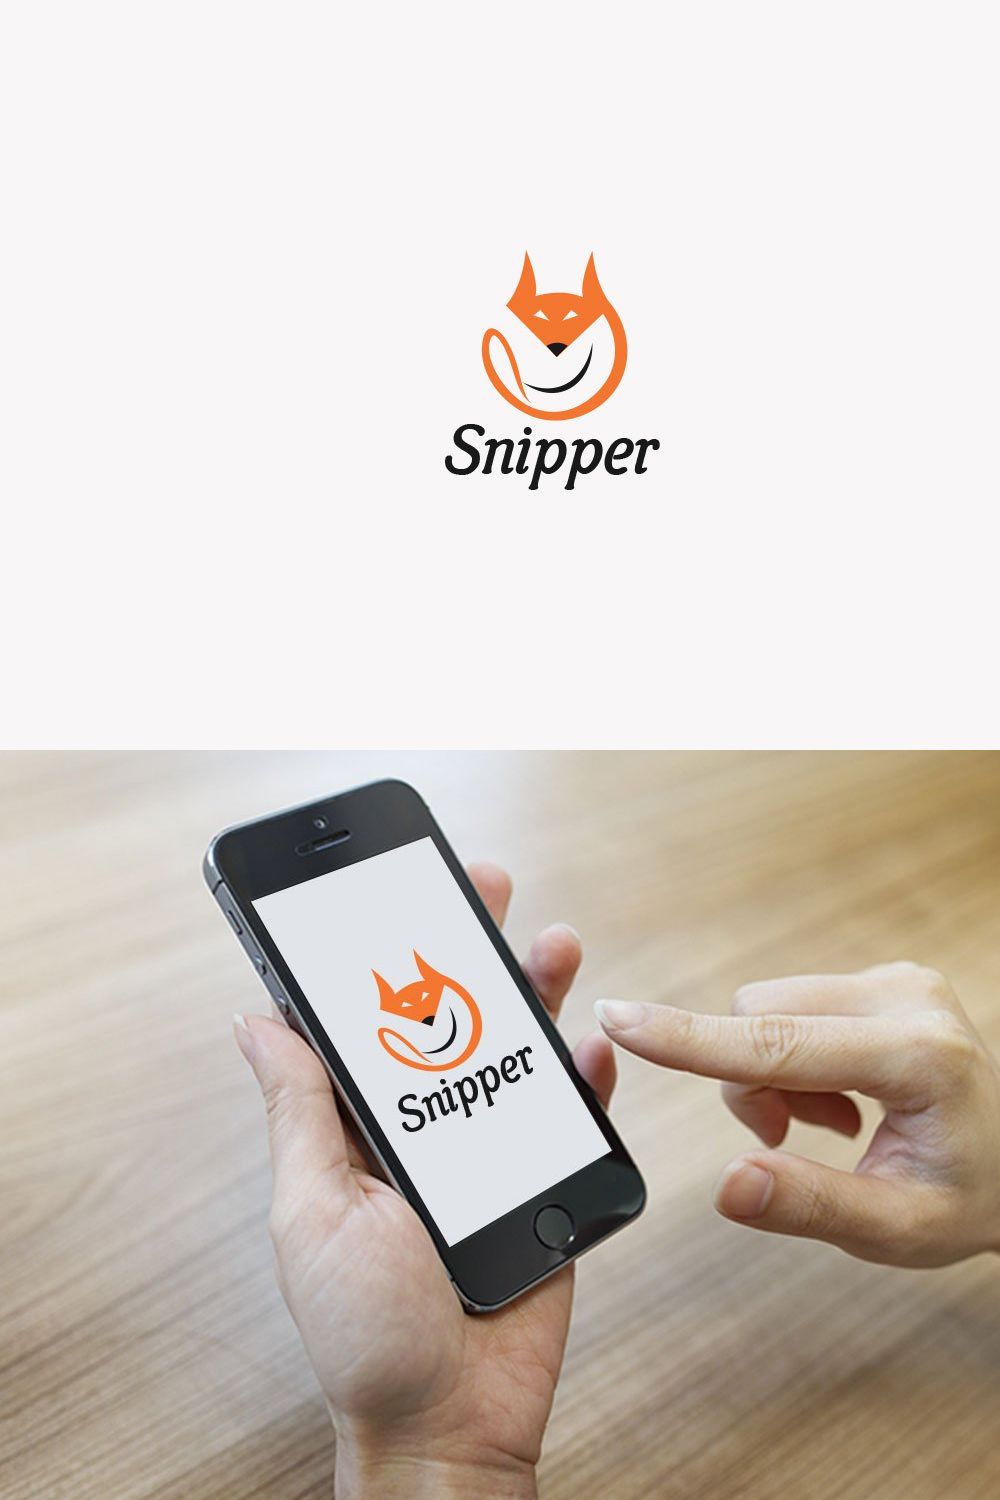 Snipper Fox Logo pinterest preview image.